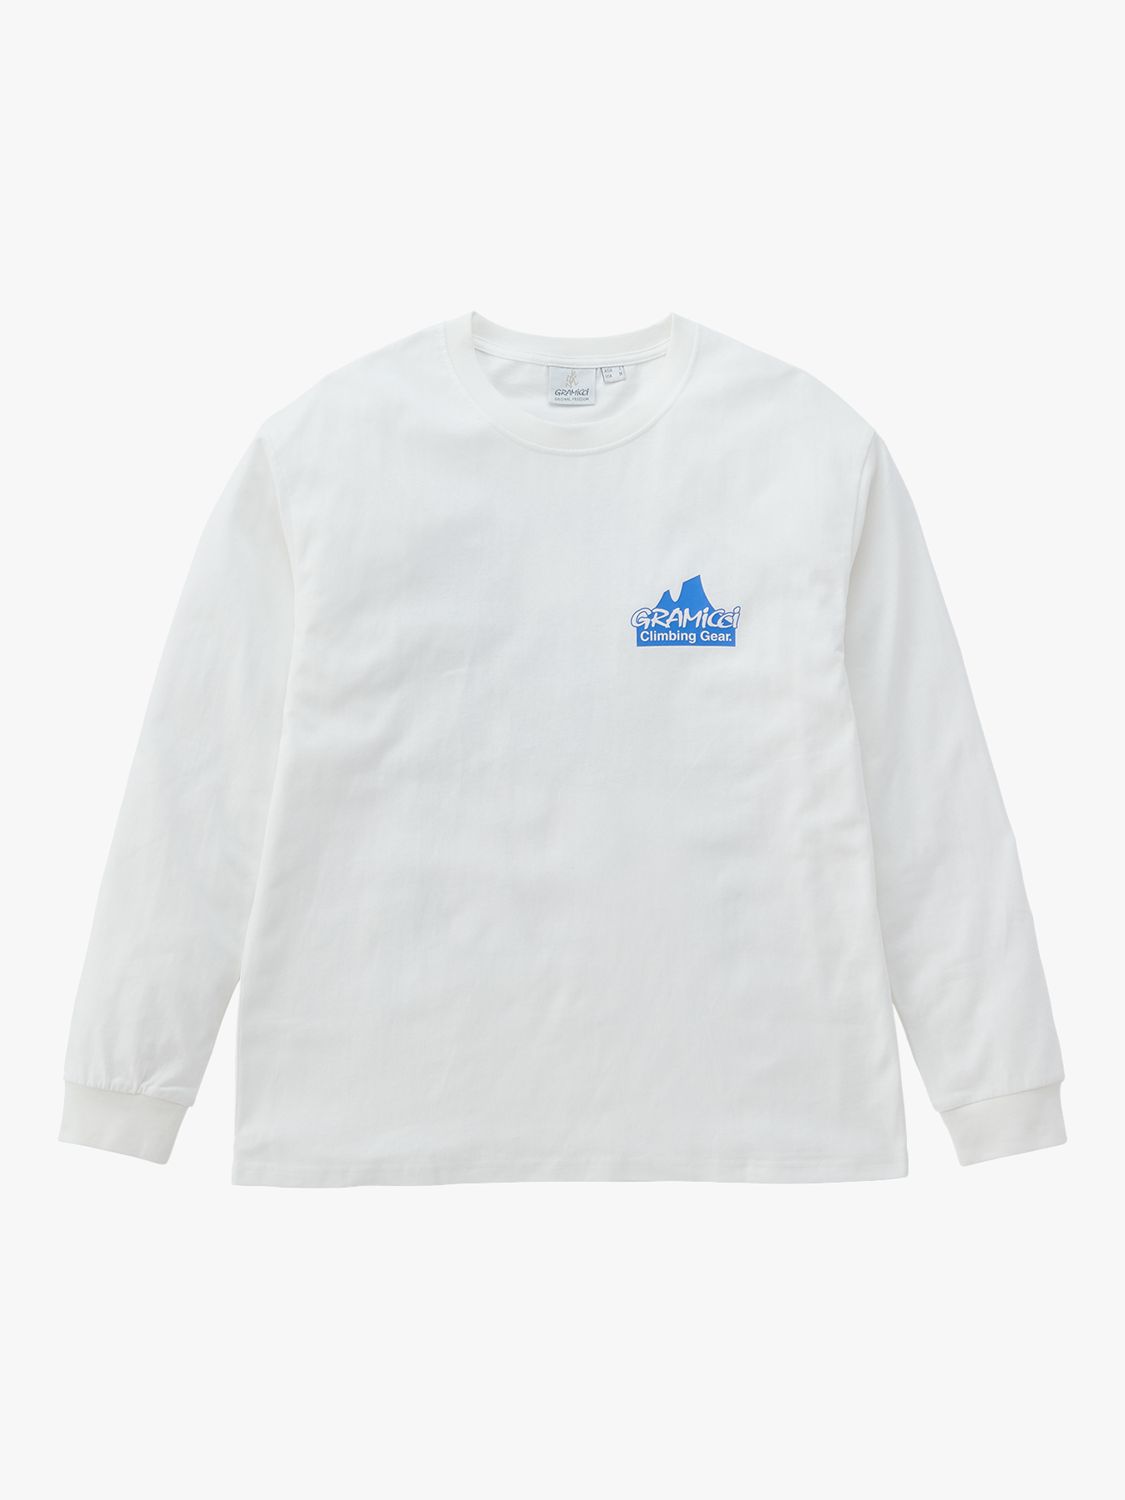 Gramicci Master Organic Cotton Long Sleeve T-Shirt, White/Multi